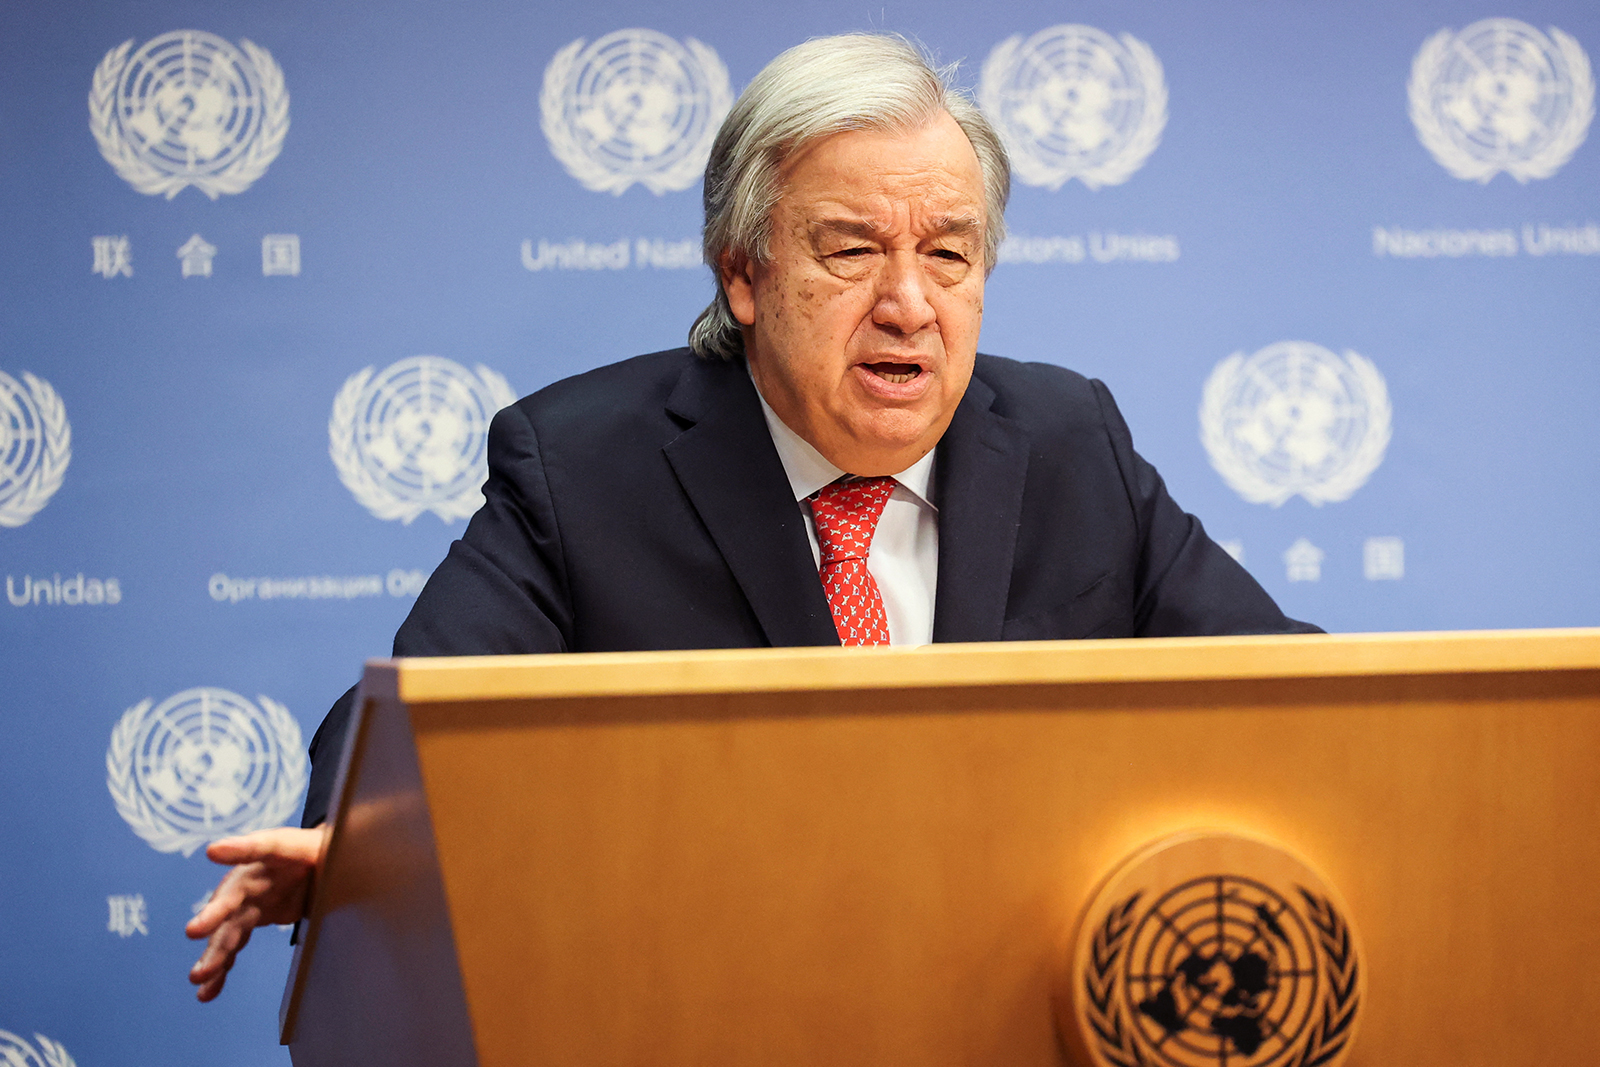 UN Secretary General Antonio Guterres speaks during a press conference in New York City on November 6.